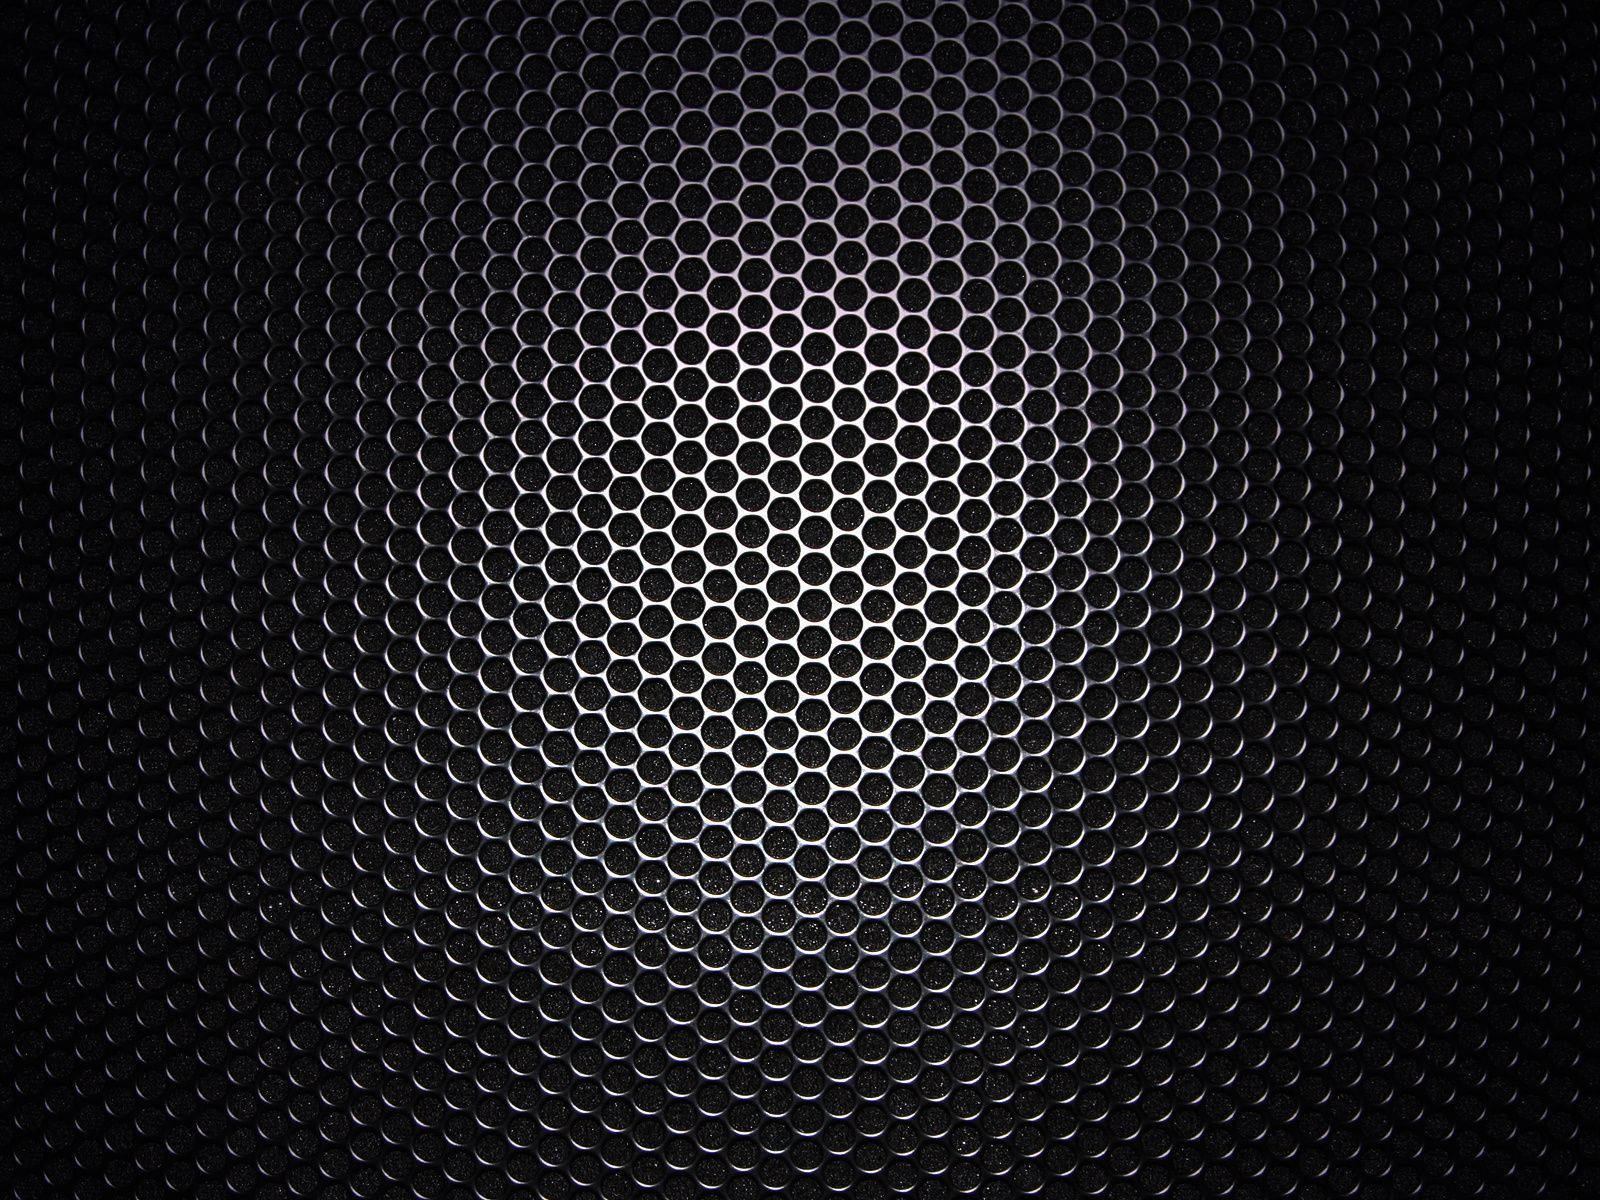 An Up-Close Look of Carbon Fiber Hex-Patterned Design Wallpaper